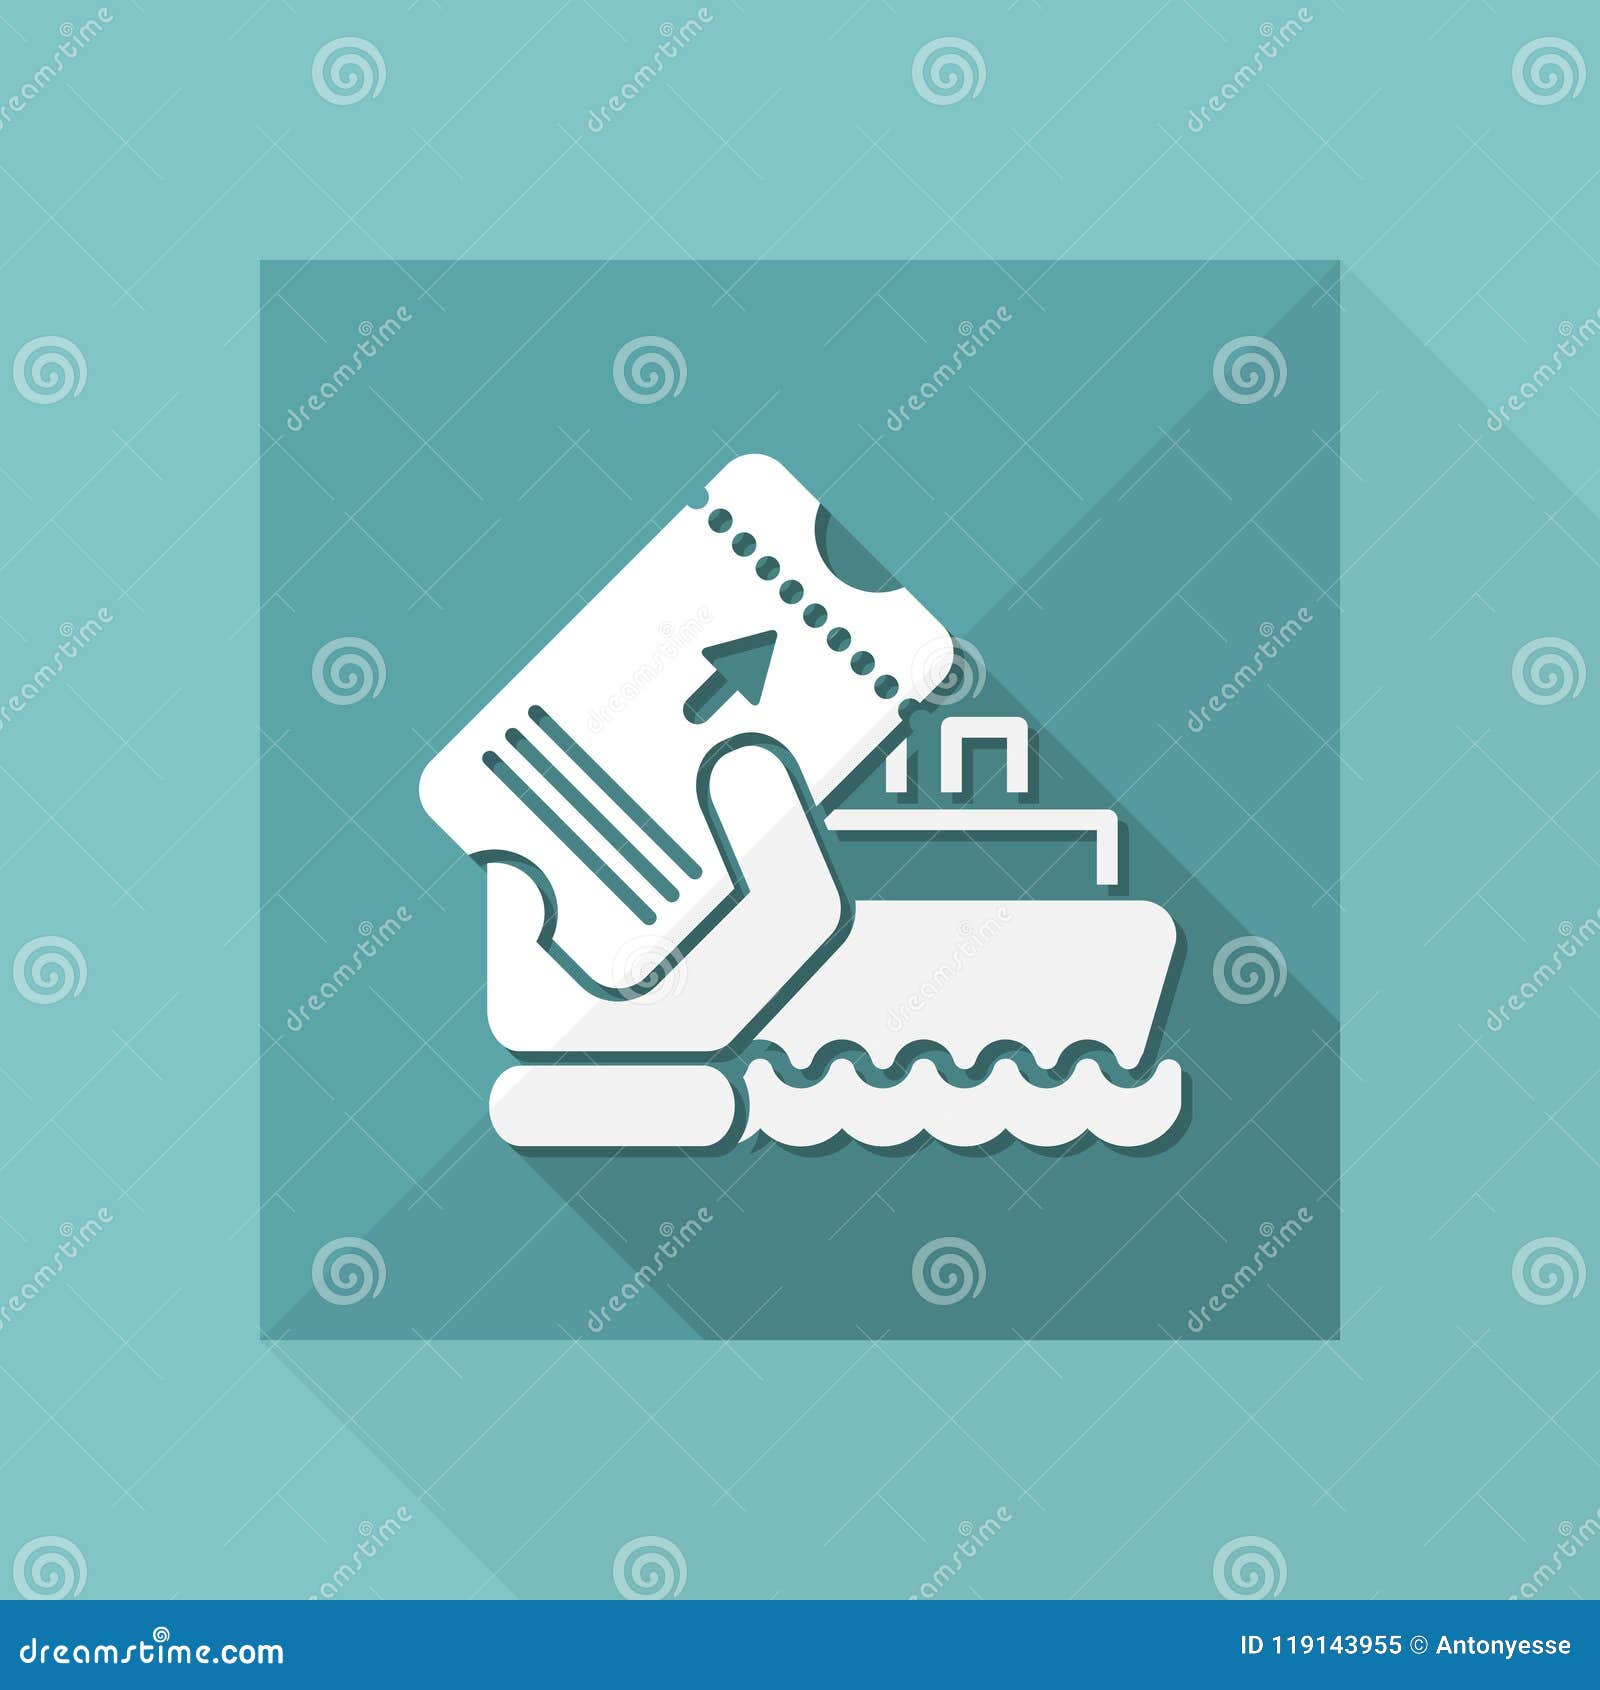 boat ticket stock vector. illustration of minute